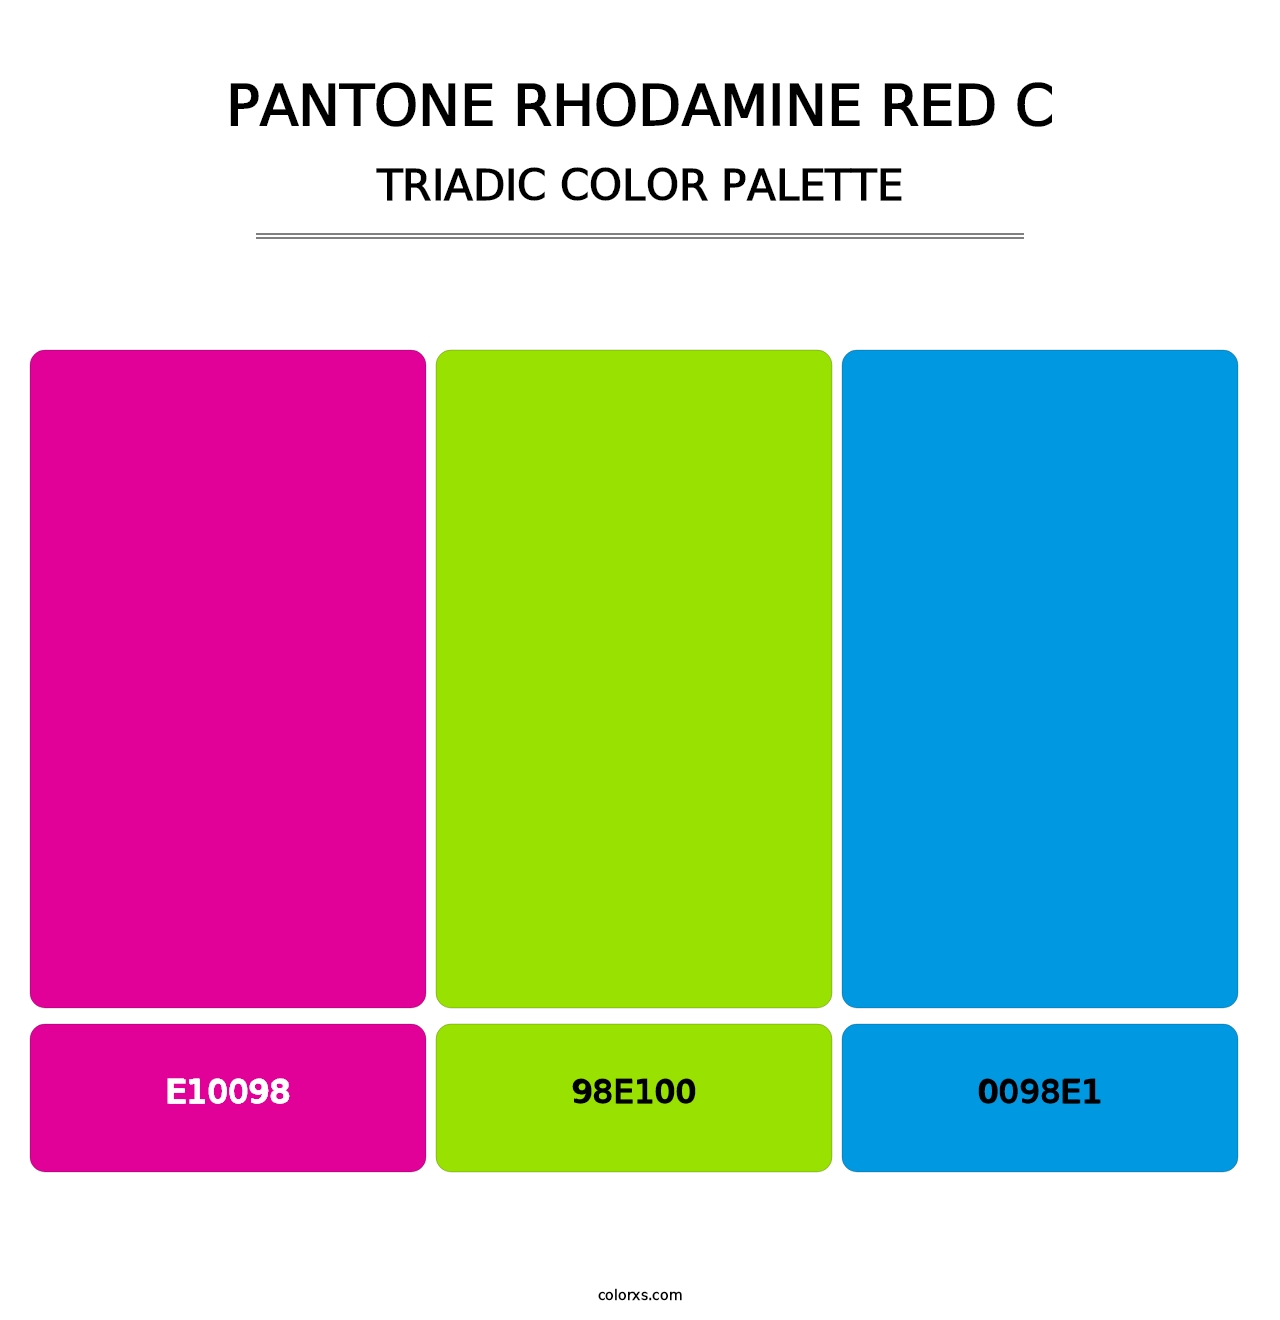 PANTONE Rhodamine Red C - Triadic Color Palette